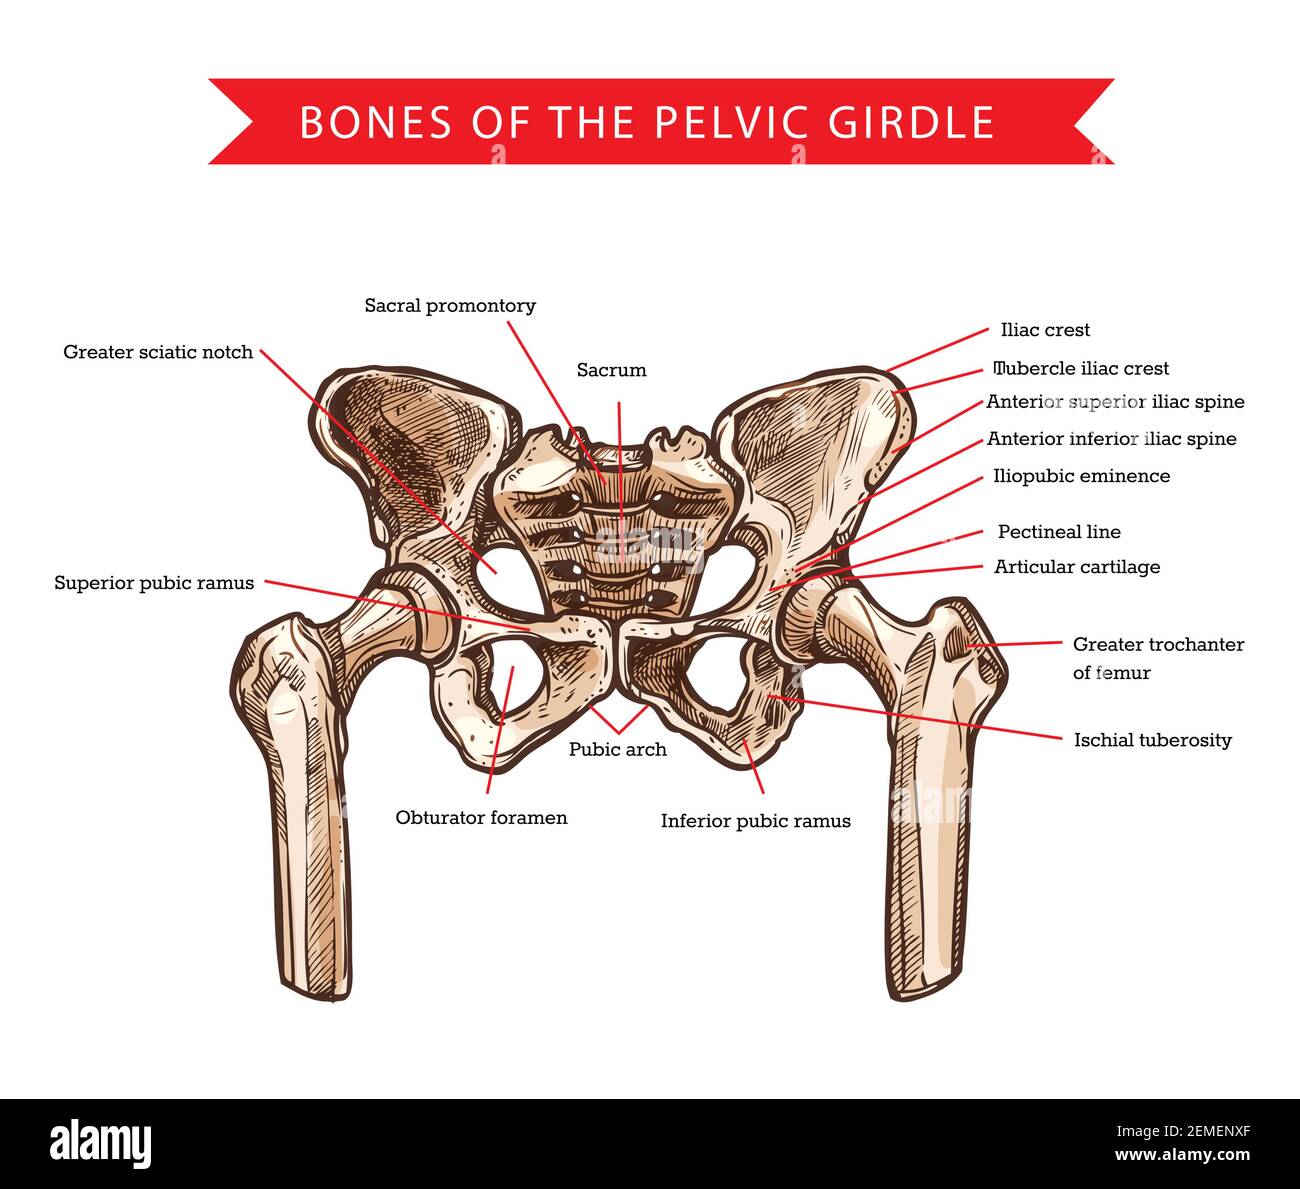 The Pelvis - Human Anatomy